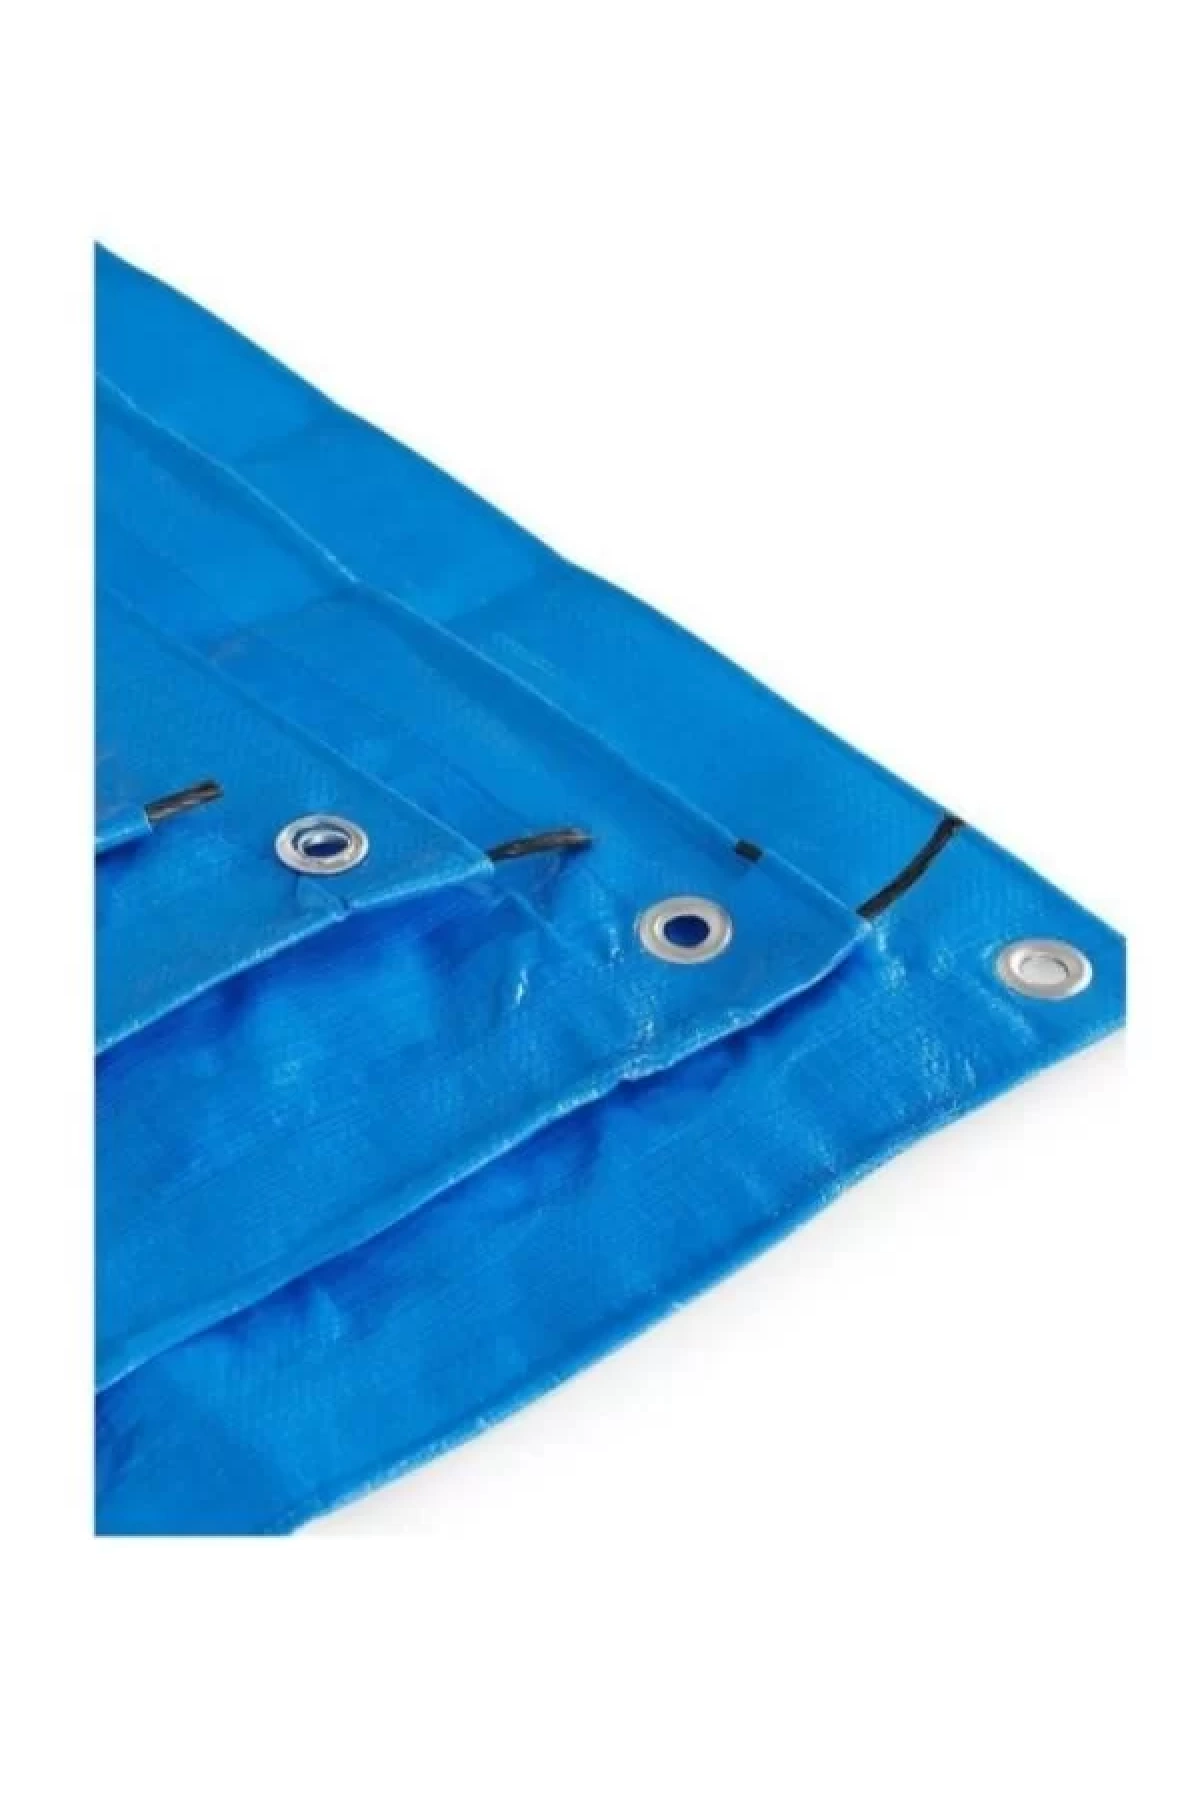 Su Geçirmez PVC-Parafin Gölgelik Çadır-Tente-Branda Mavi 10 x 20 m